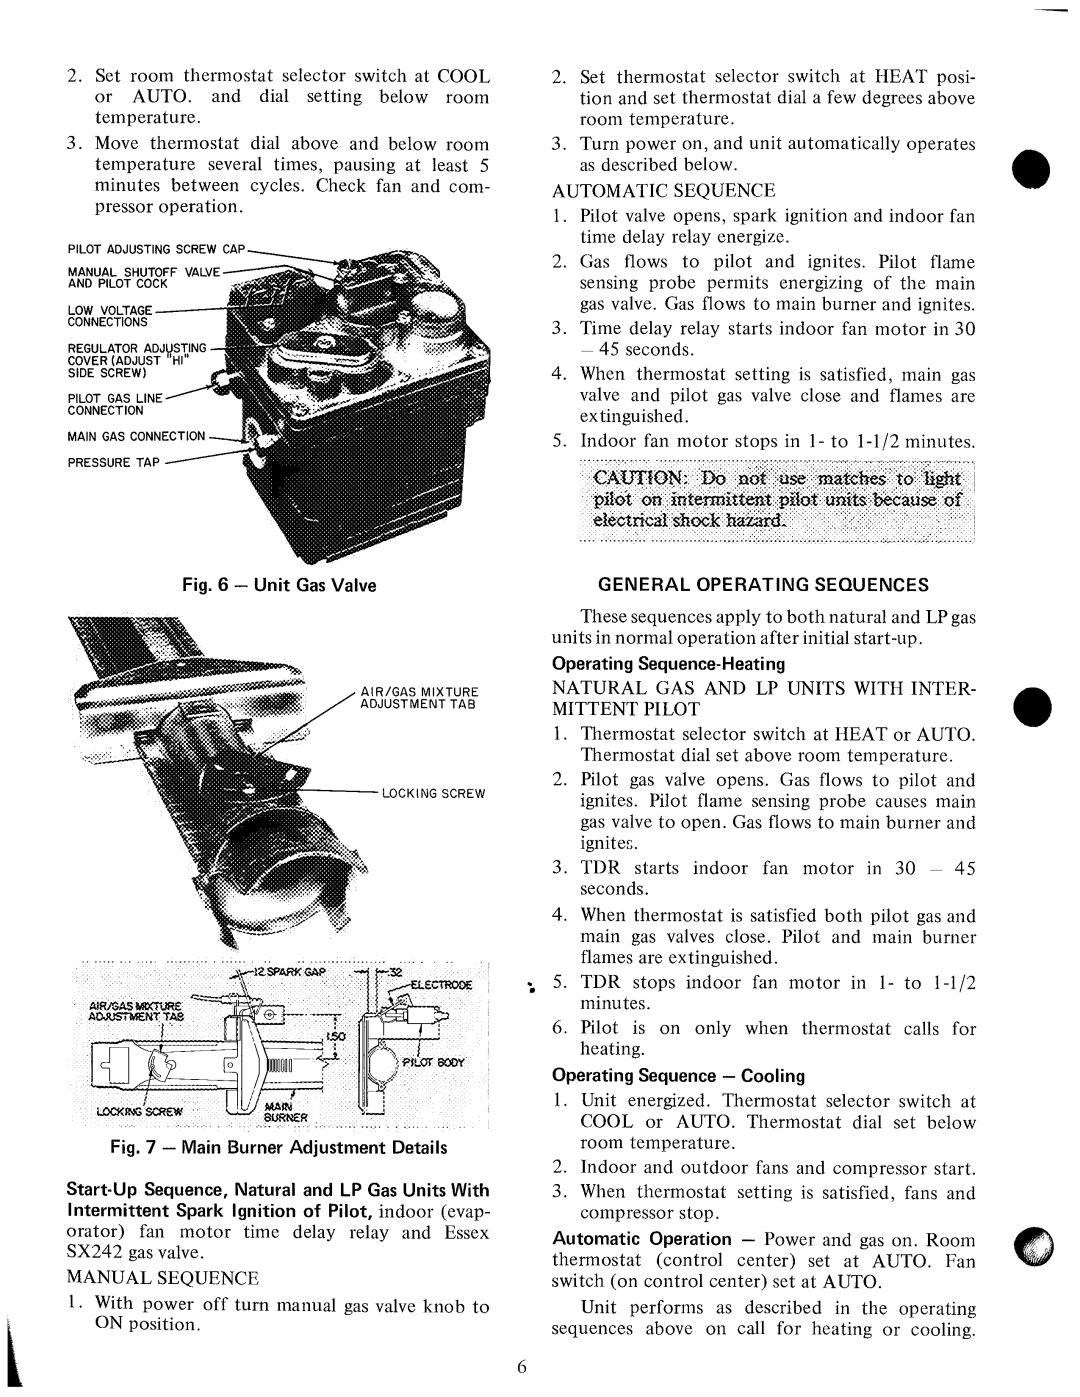 Carrier 48EL manual 